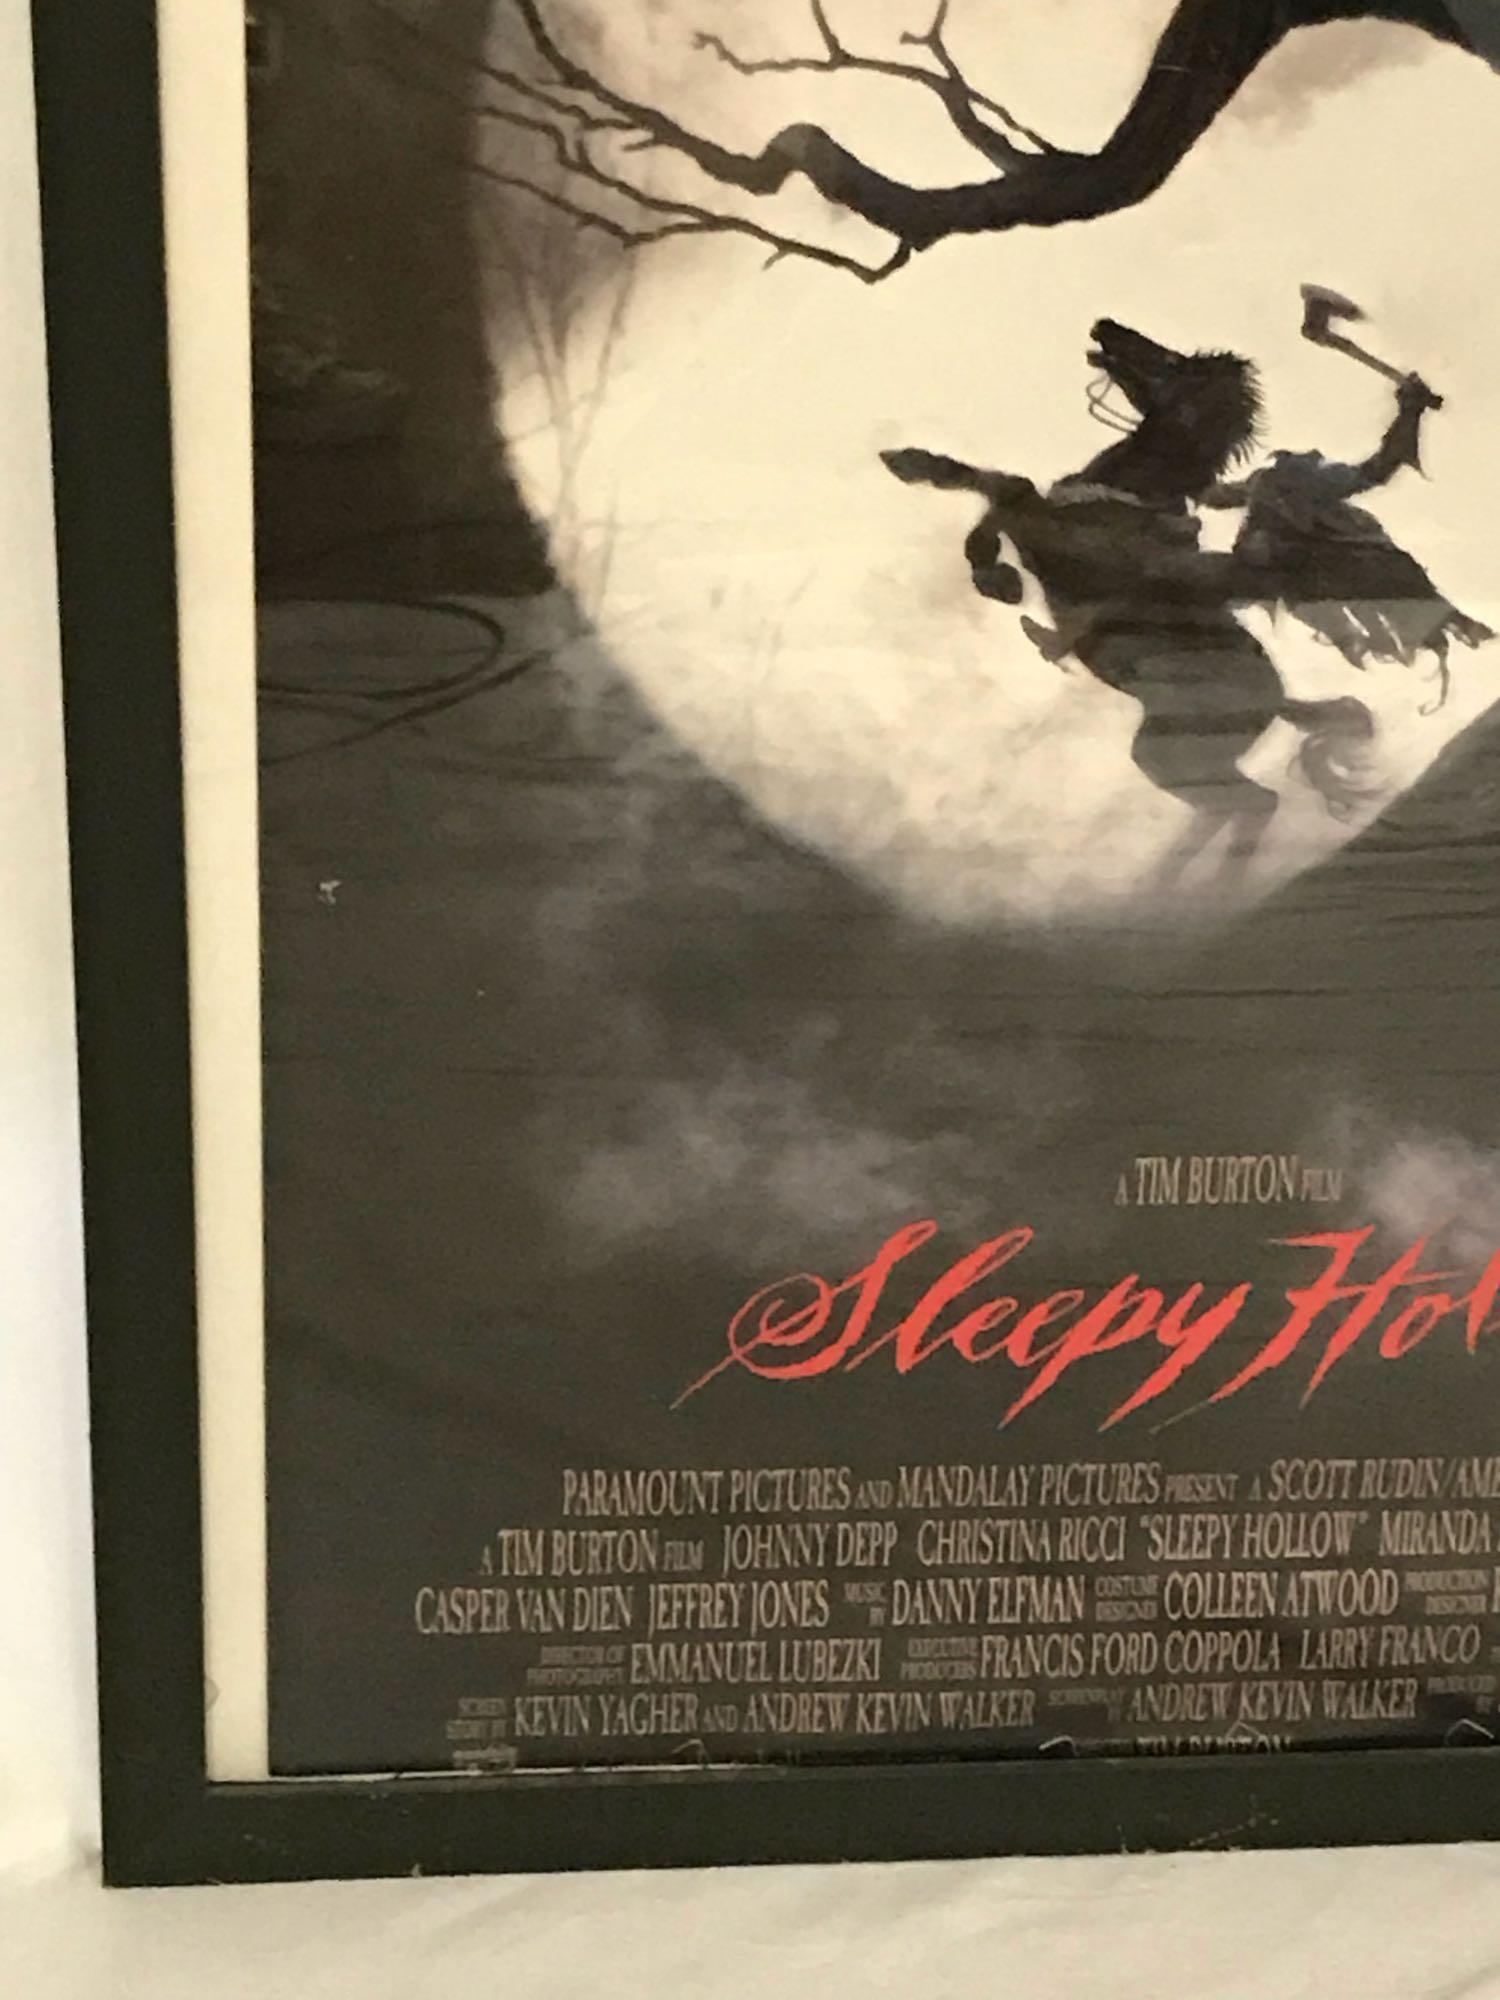 Original Sleepy Hollow Advance Movie Poster